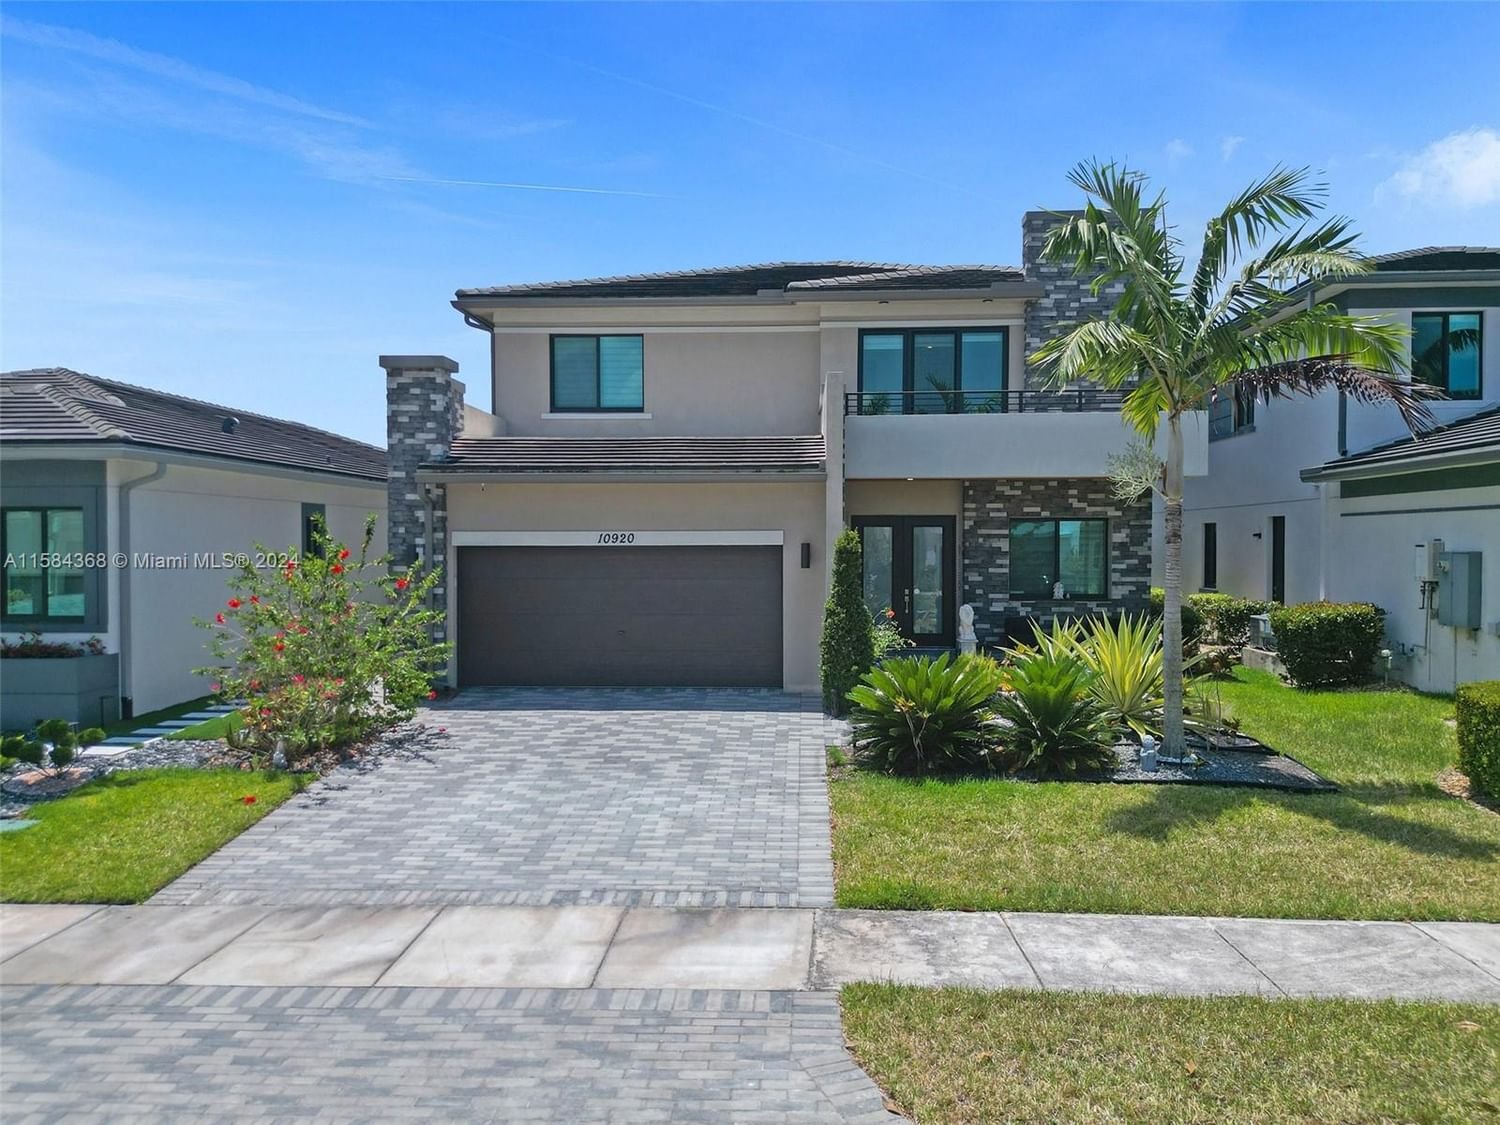 Real estate property located at 10920 Vista Ter, Broward County, TRIPLE H RANCH PLAT, Parkland, FL